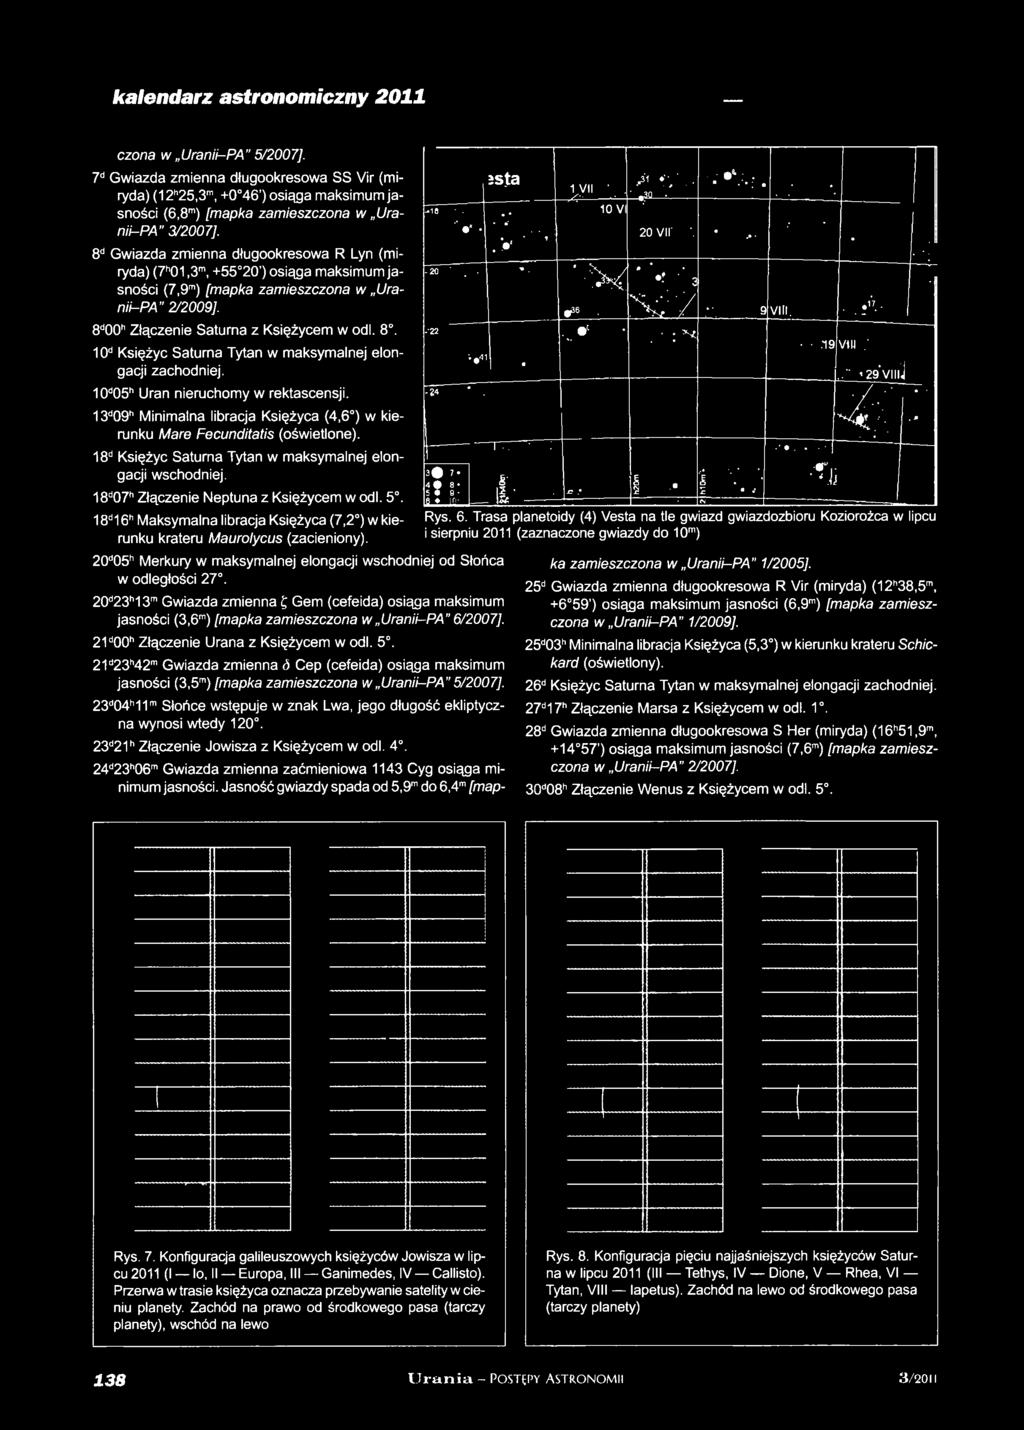 18d16h Maksymalna libracja Księżyca (7,2 ) w kierunku krateru Maurolycus (zacieniony). - 18 * J s t a 1 VII. & * Y. X " J i- rfa = io vi ' V - v. V -20 # - <. - 22 ; #41-24. 3 # 7-4 # 8 5 9 Ł!